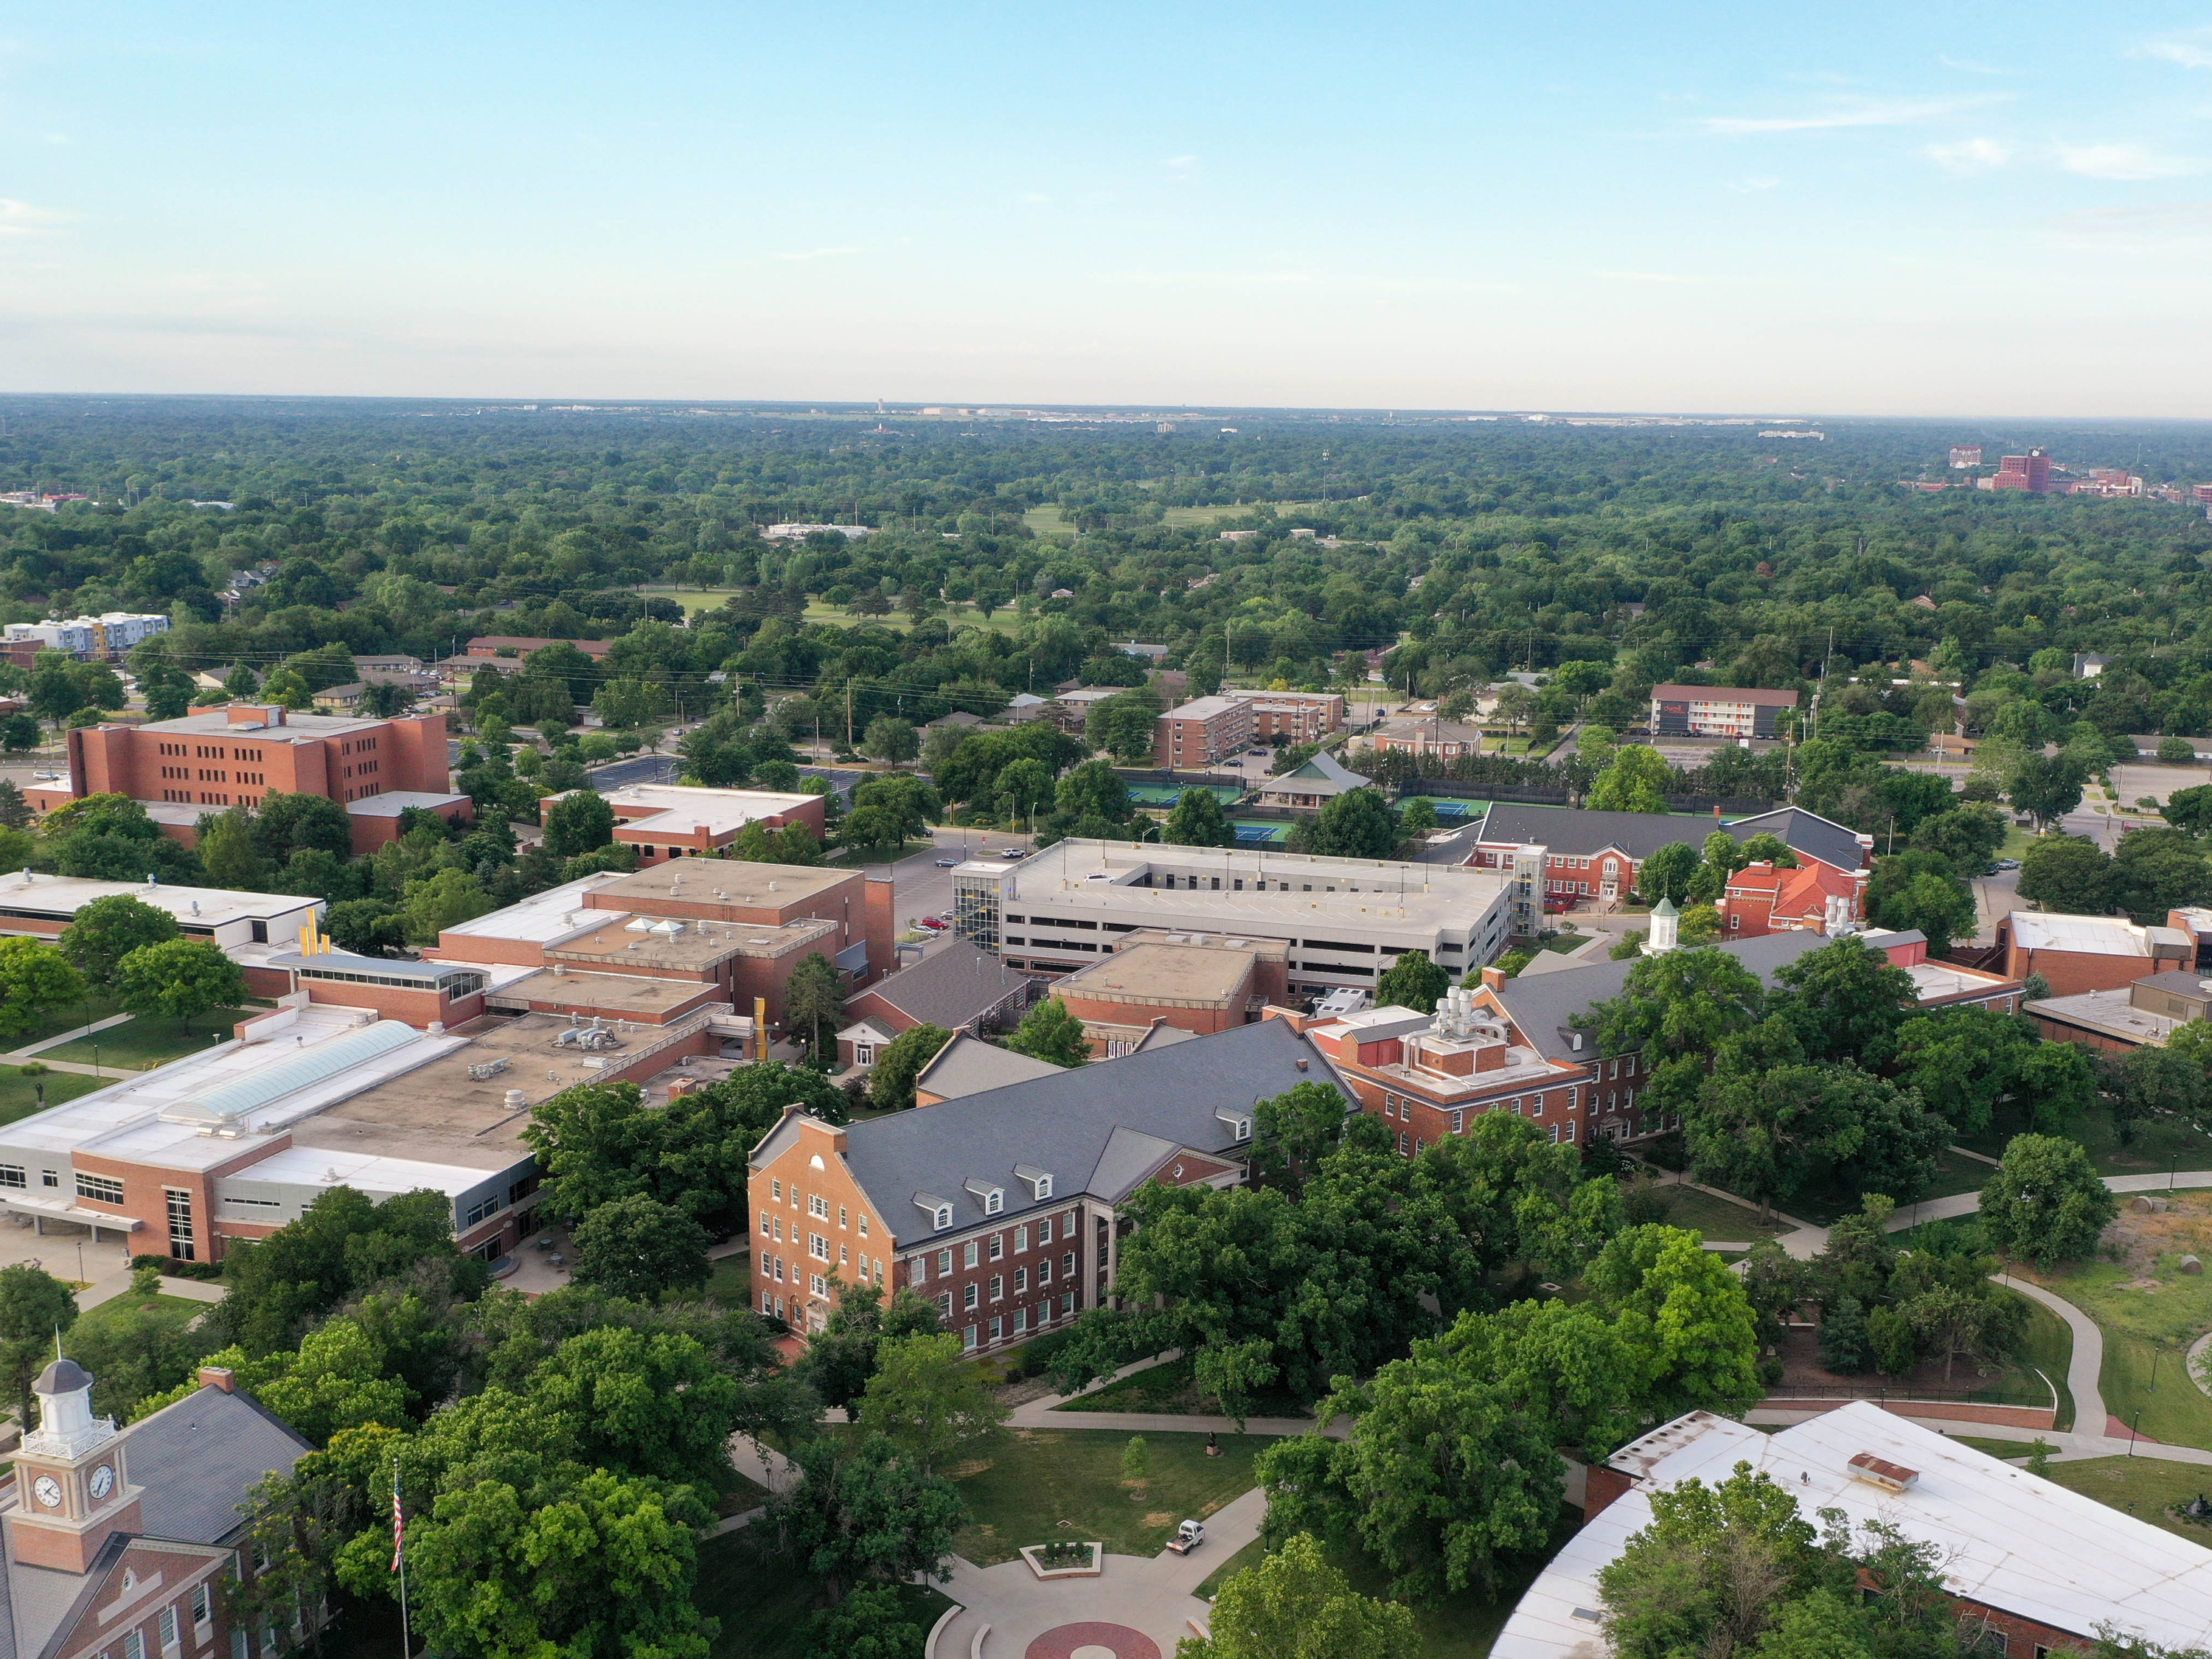 Campus Aerial looking south